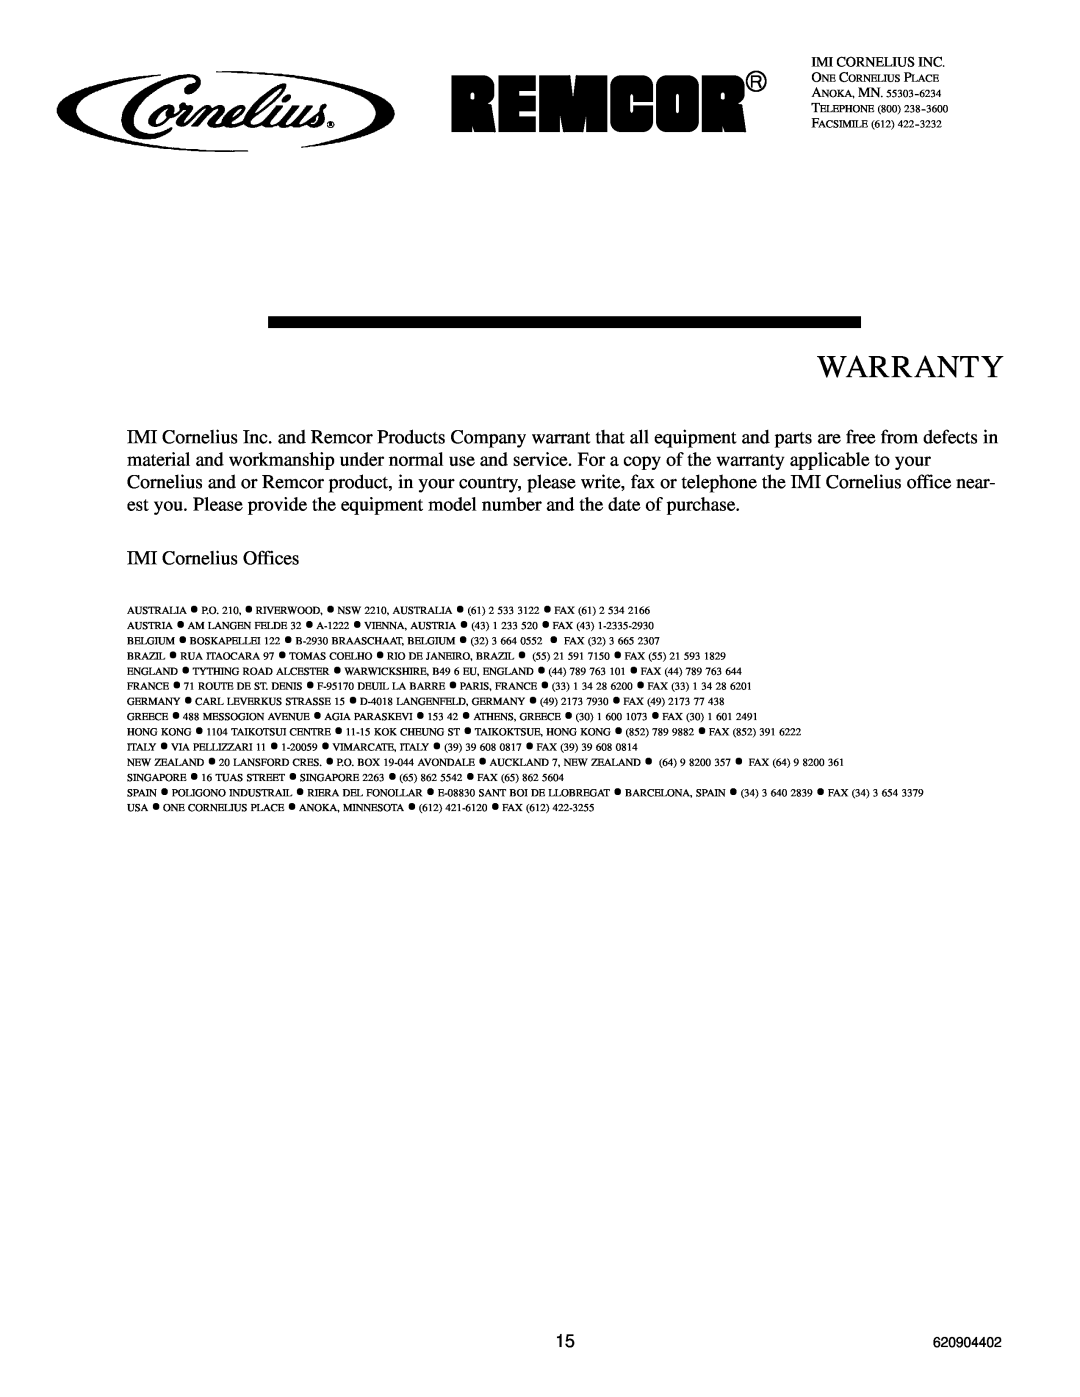 Cornelius 150 8 Valve manual Warranty, IMI Cornelius Offices, Imi Cornelius Inc 